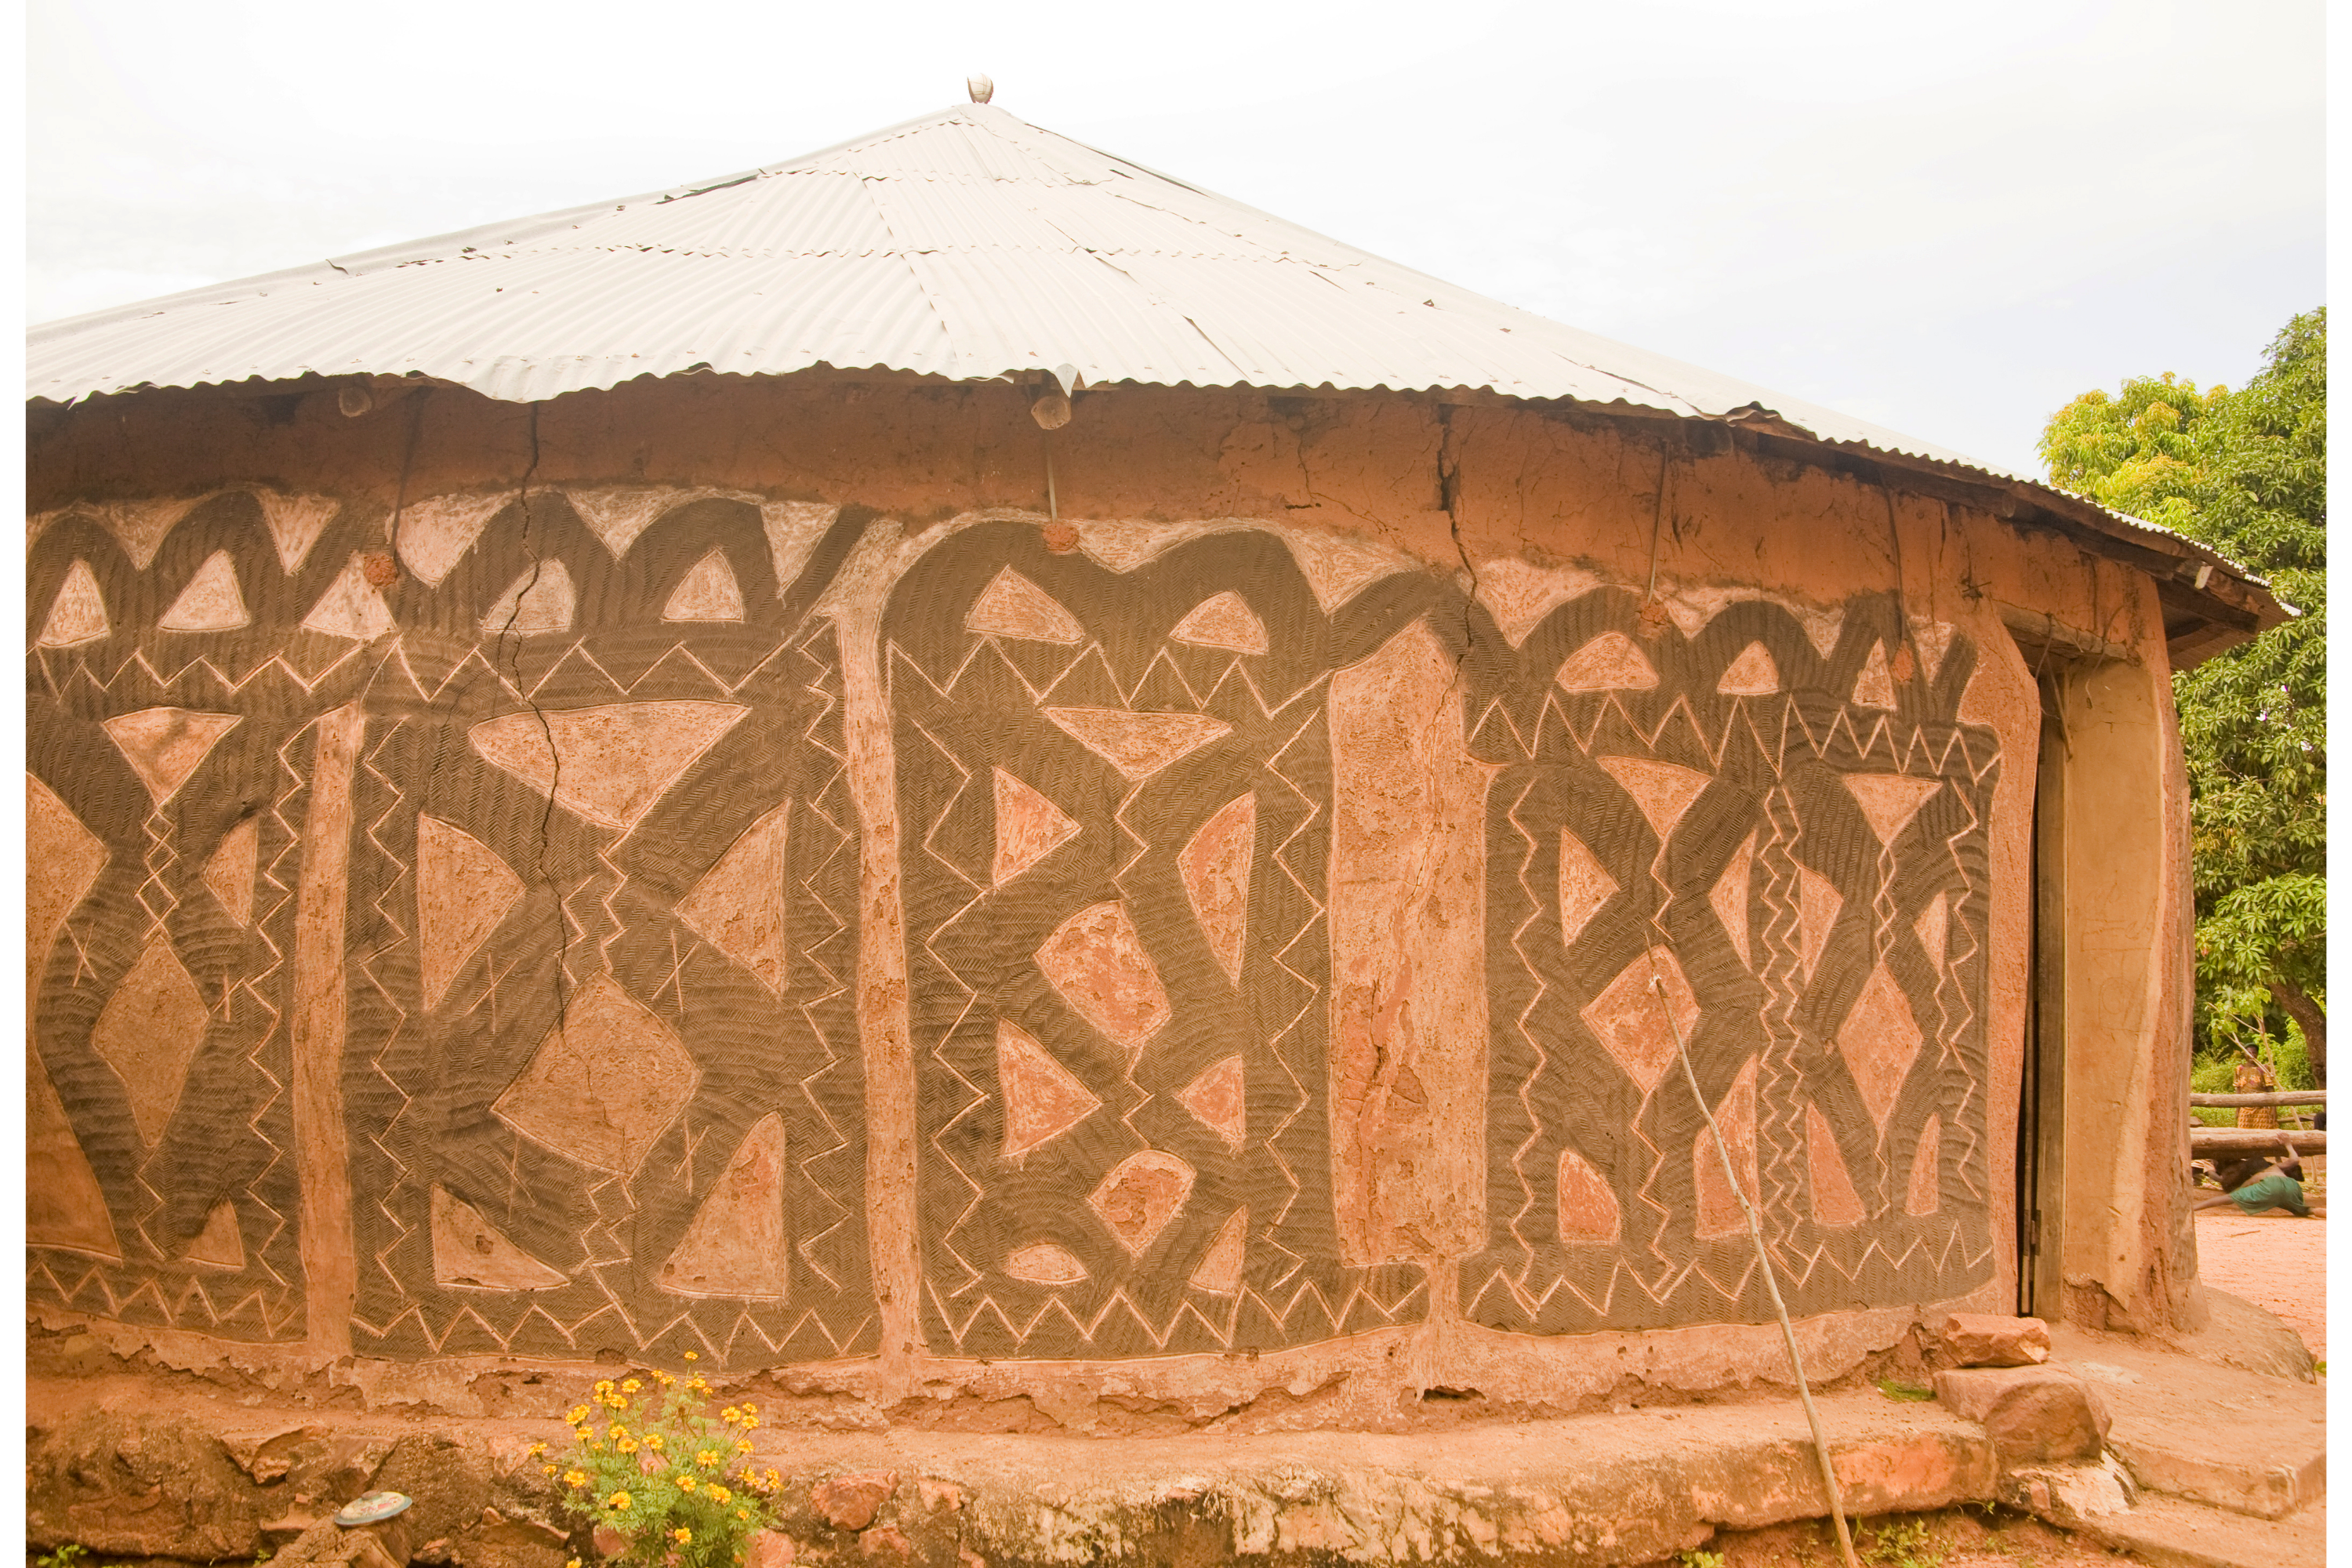 Day 12: Dagomba Villages ( January 16)